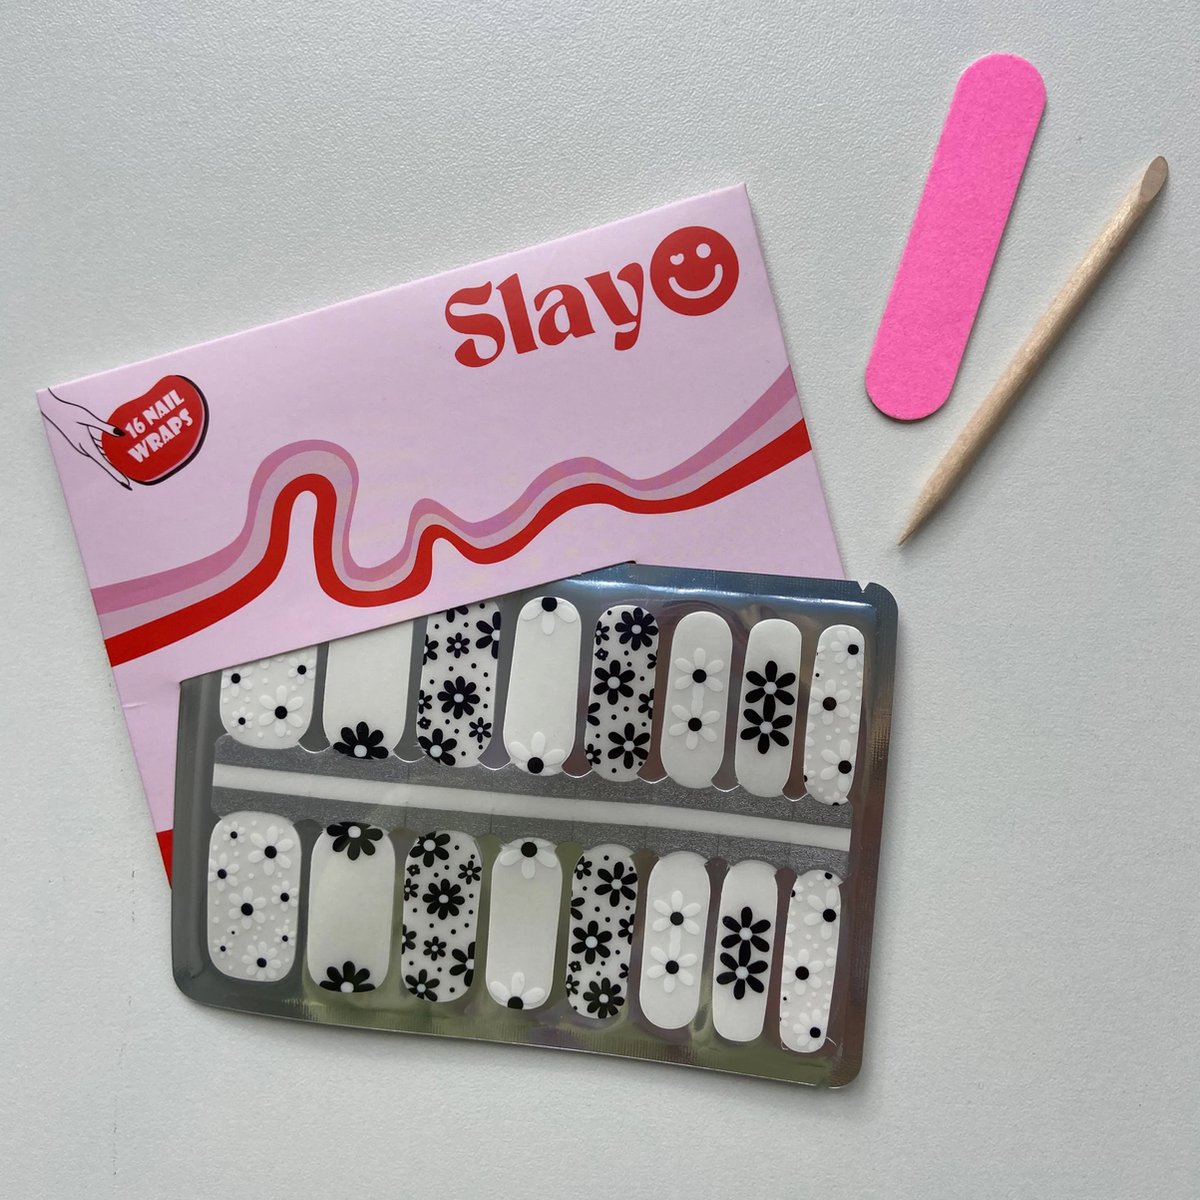 Slayo© - Nagelstickers - Floral Fantasy - Nail Wraps - Nagel Stickers - Nail Stickers - Nail Art - Nail Wraps Sticker - Nail Art Stickers - Nagelfolie - GEEN lamp nodig